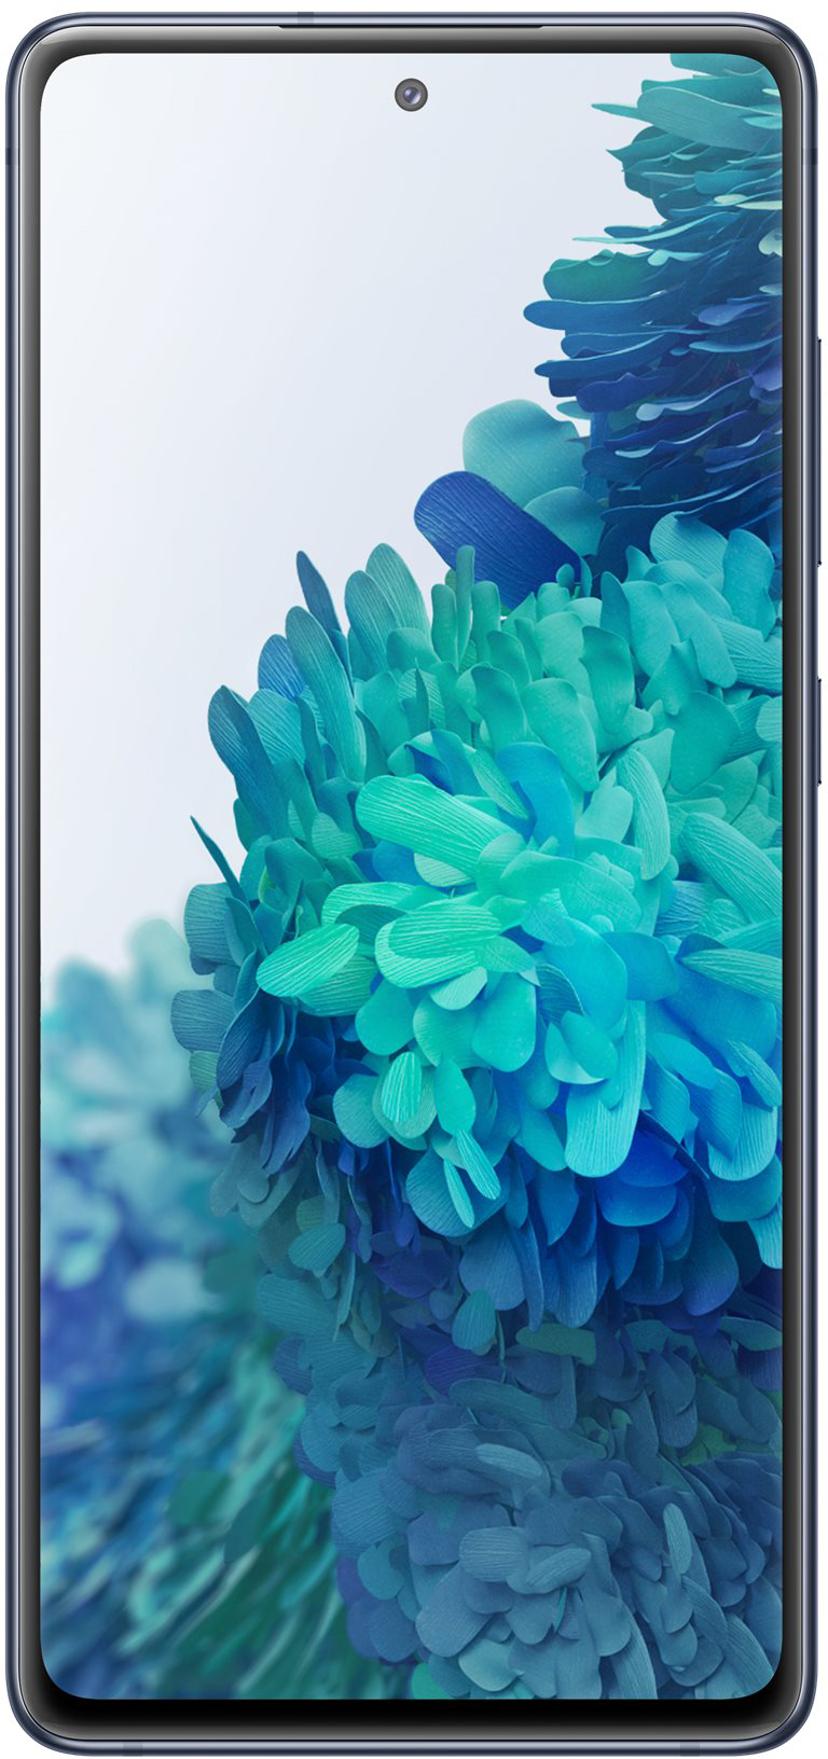 Samsung Galaxy S20 FE 4G 128GB Dobbelt-SIM Blå